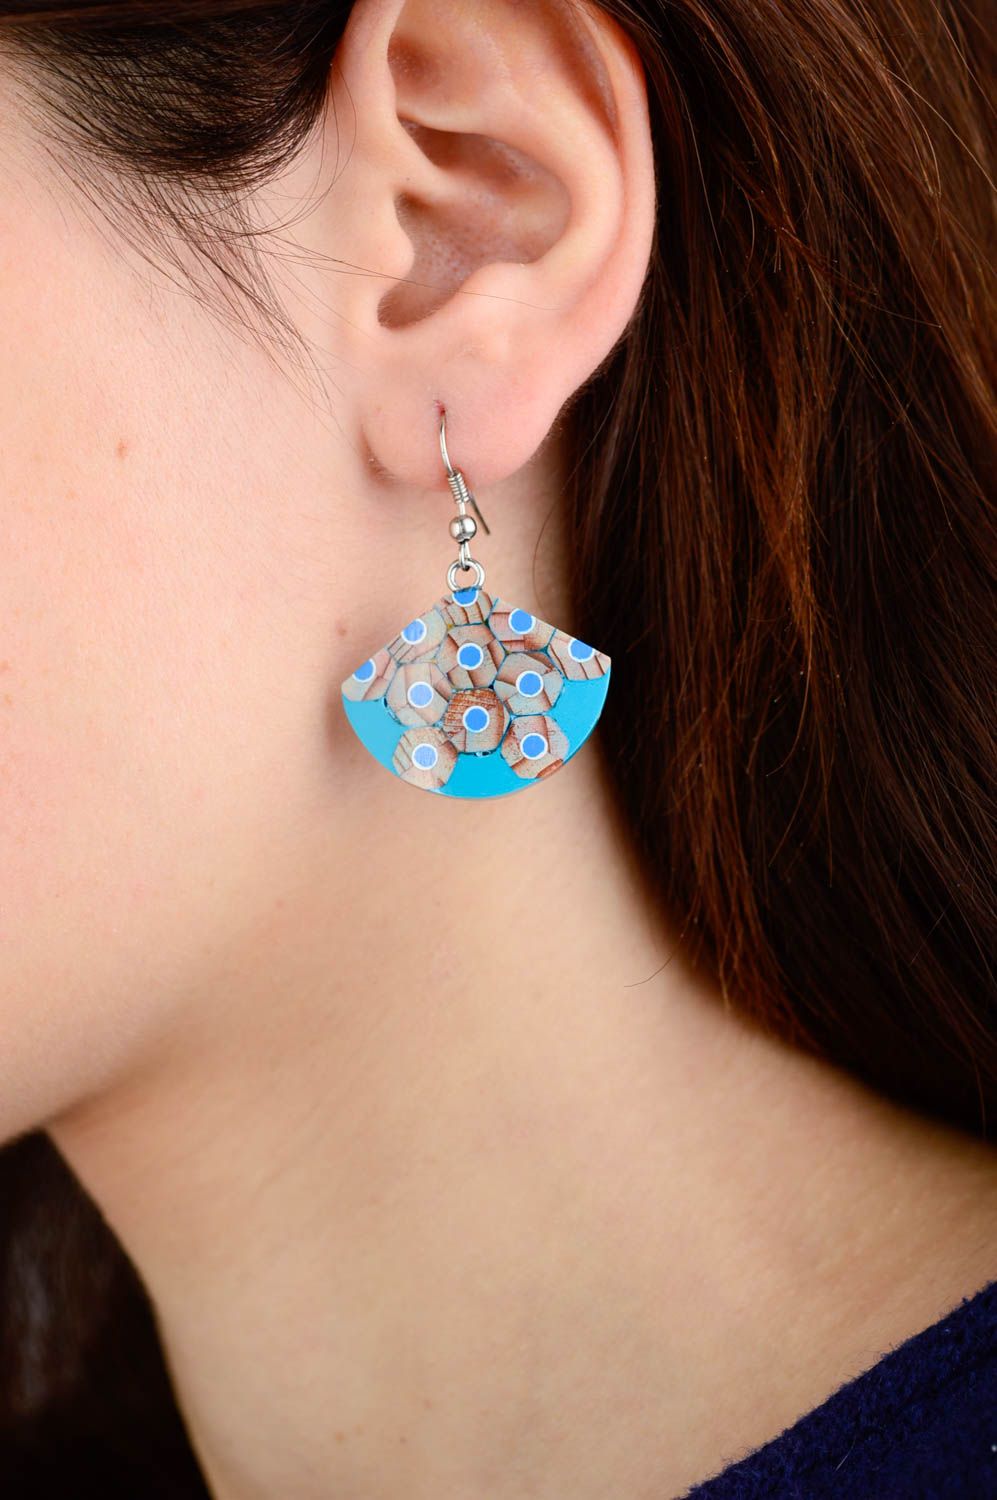 Handmade bright earrings designer dangling earrings stylish summer jewelry photo 2